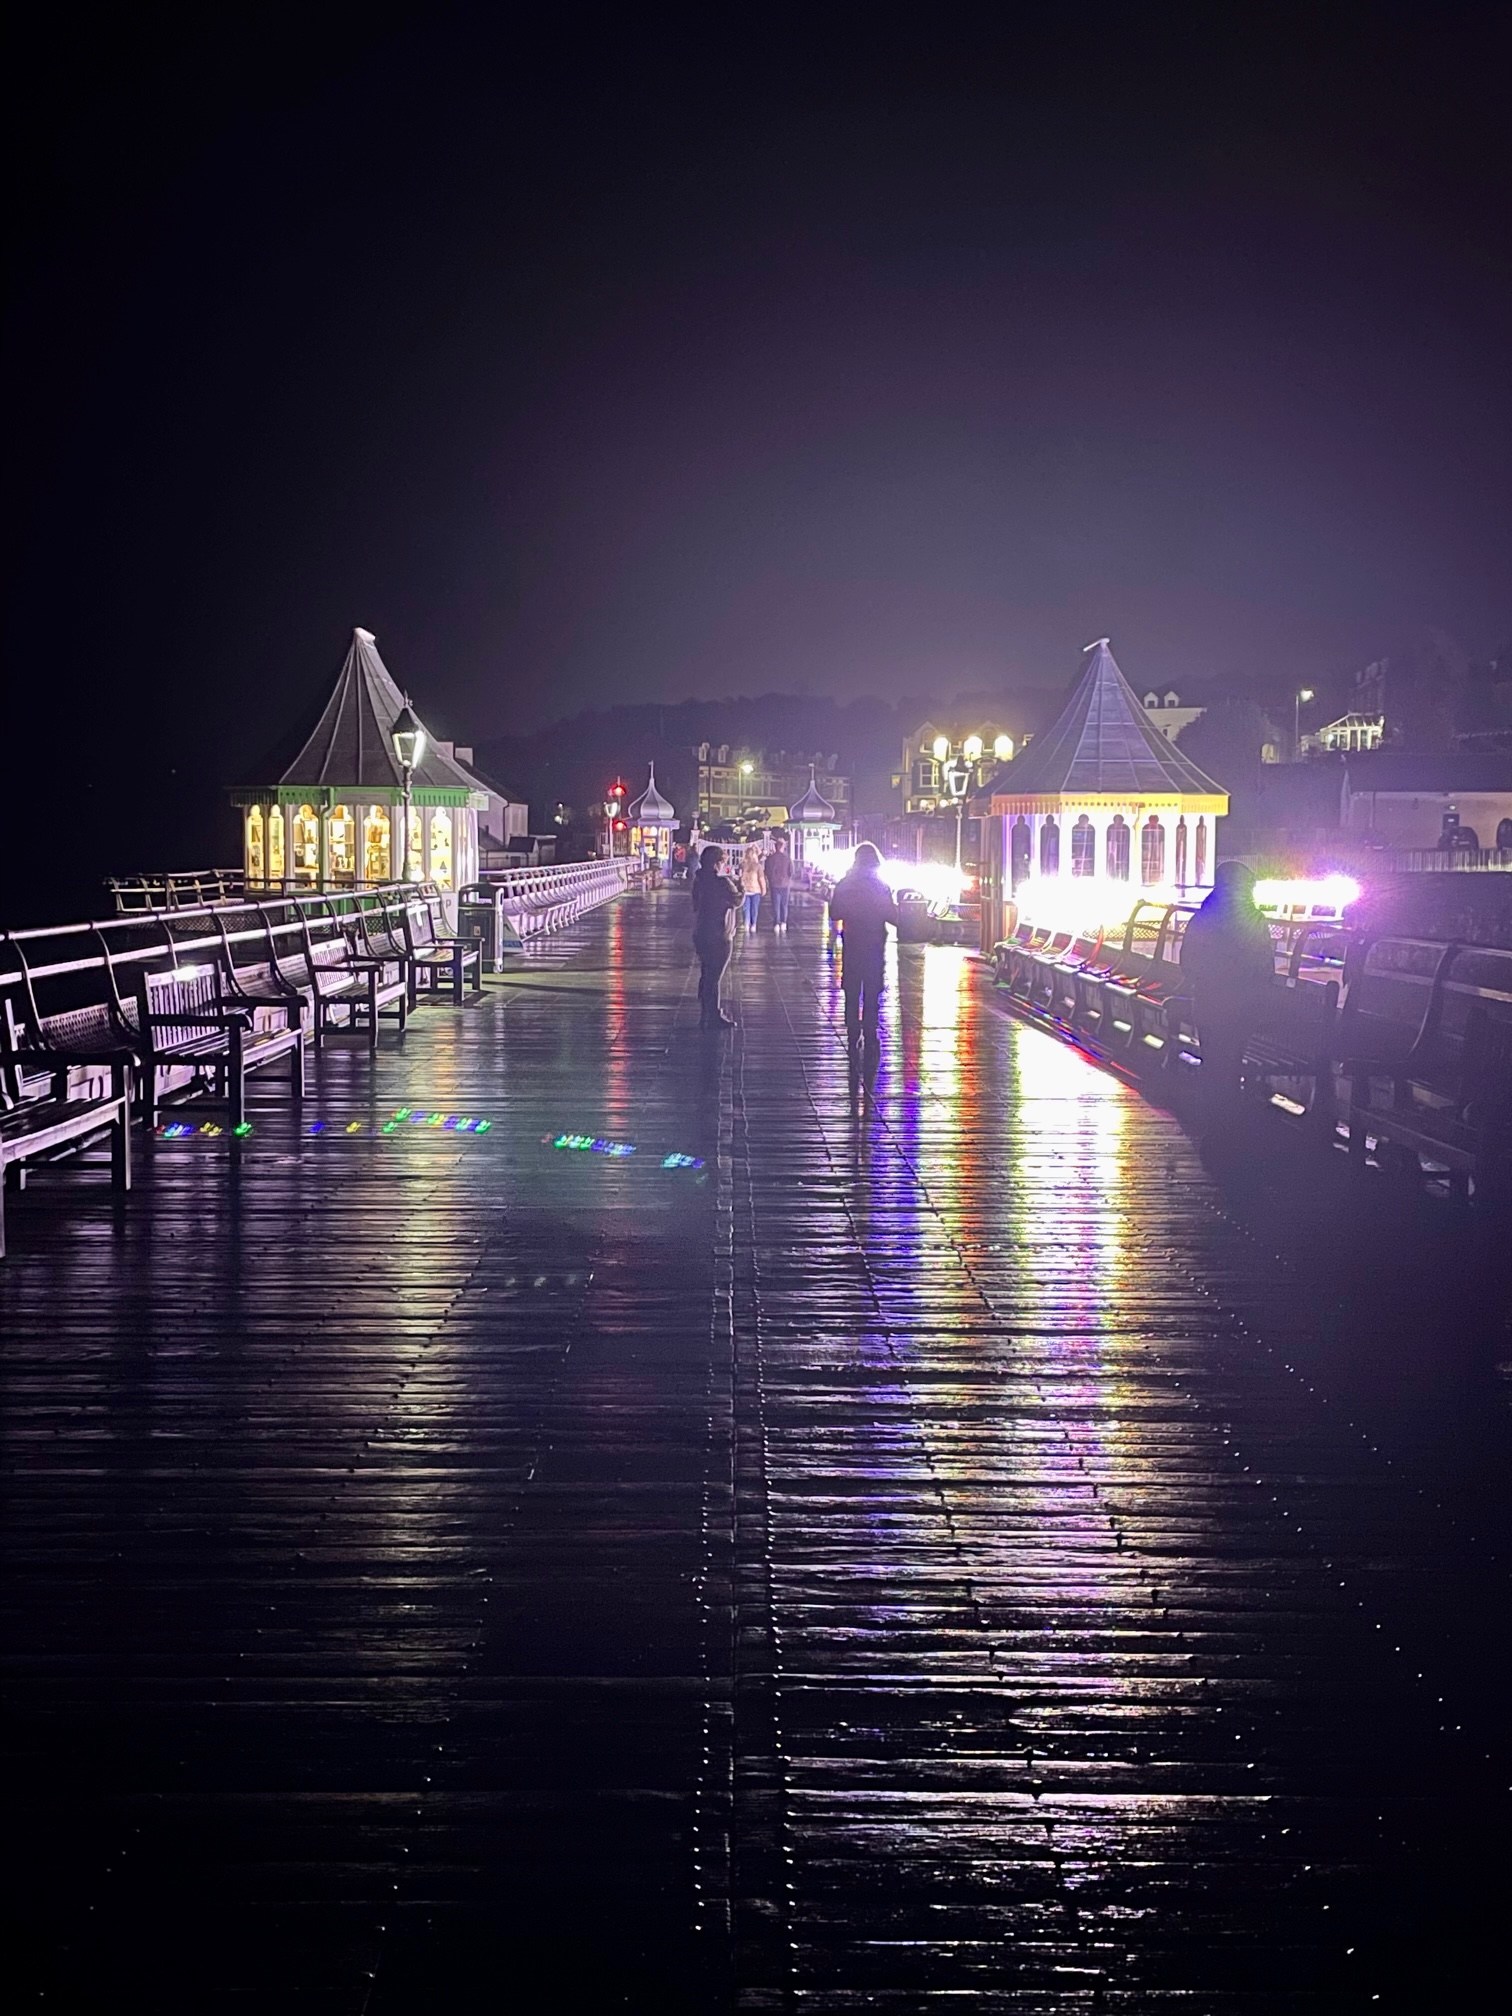 Bangor Pier illuminated at night